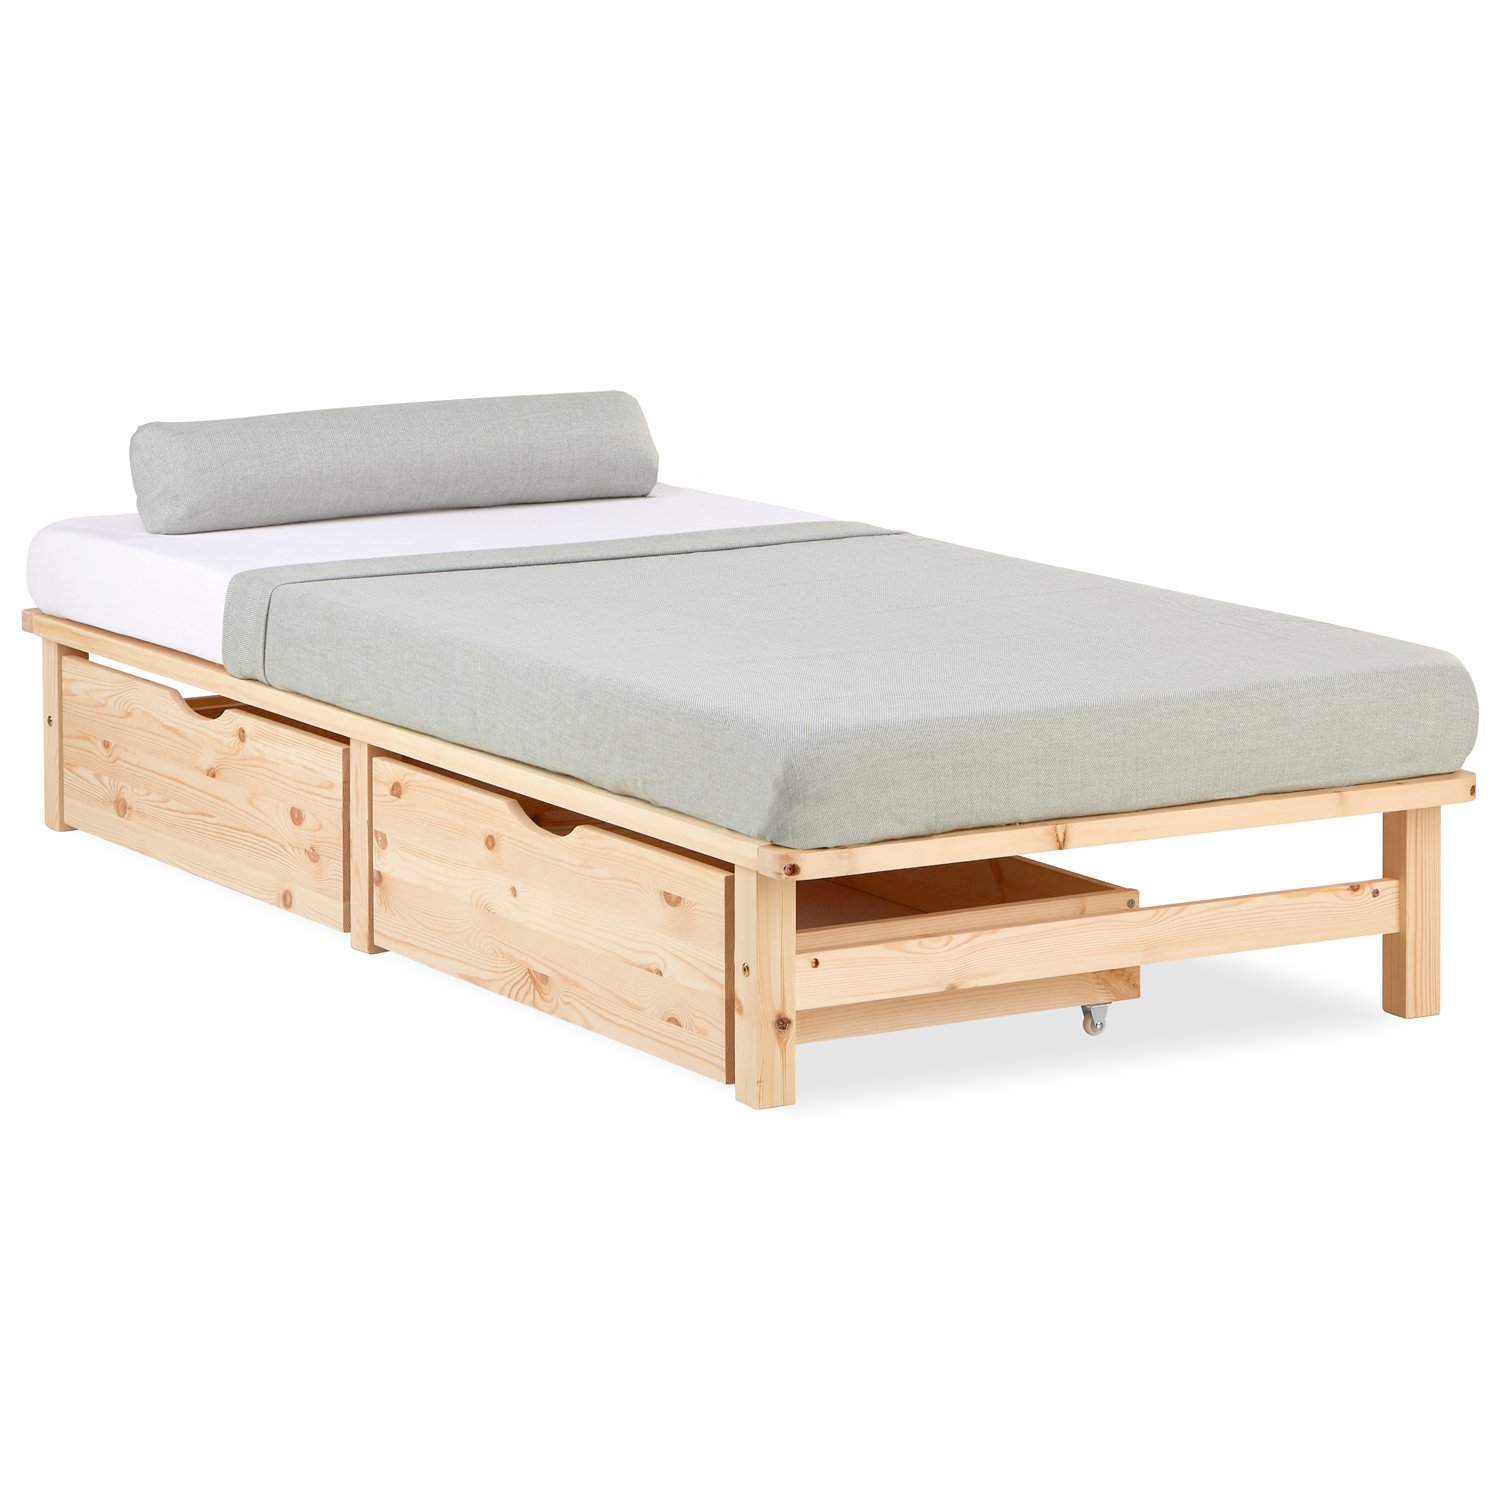 Pallet Bed 90x200 cm with Bed Drawer Set of 2 Slatts Solid Wooden Bed Natural Pallet Furniture